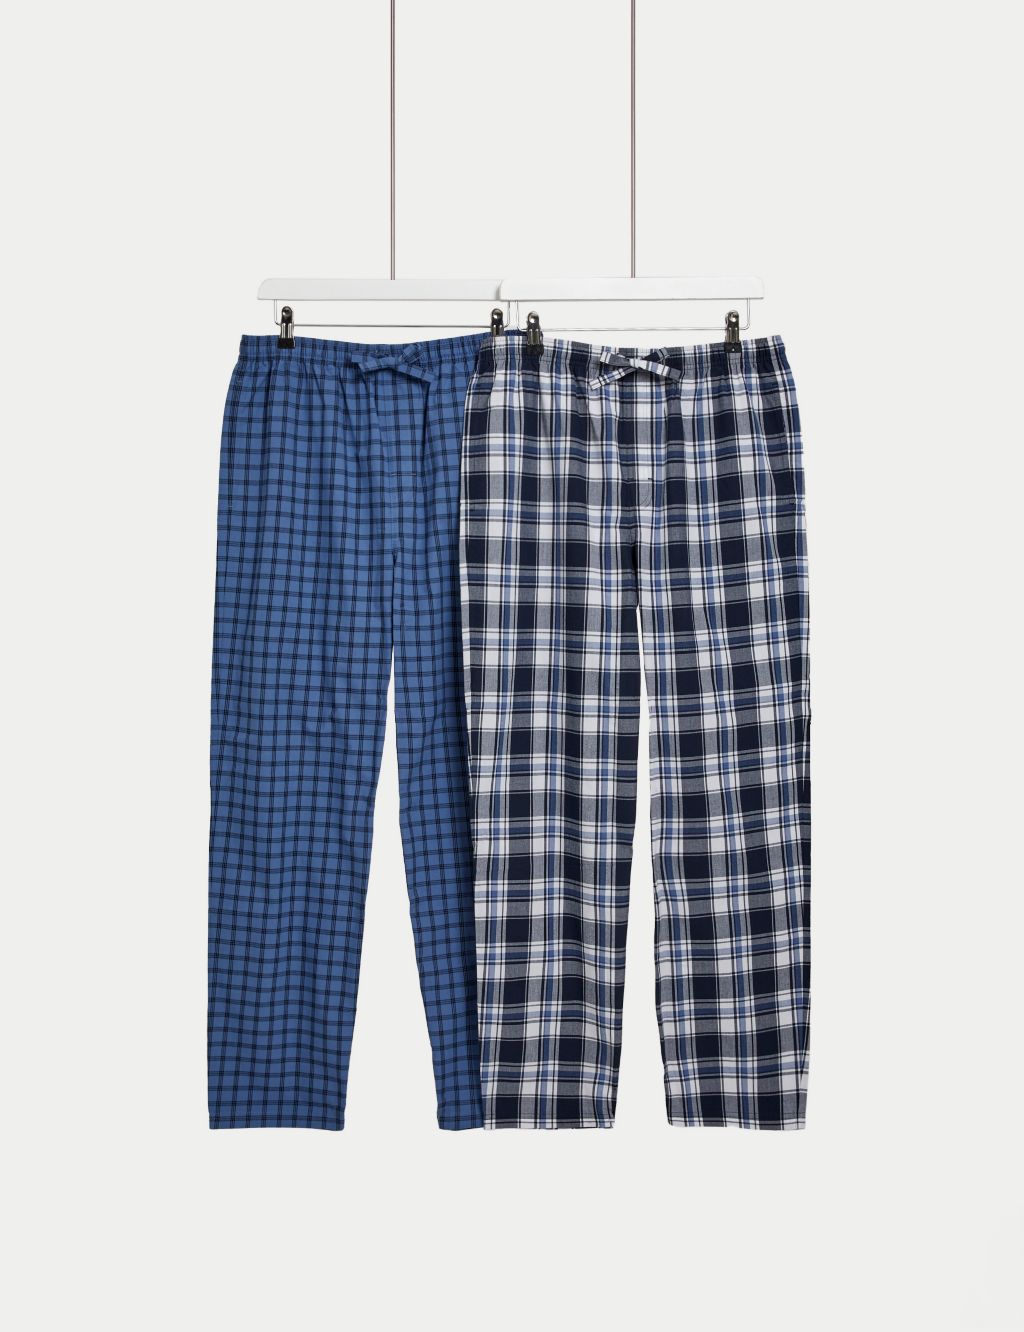 Blue checked 100% cotton pyjama bottoms